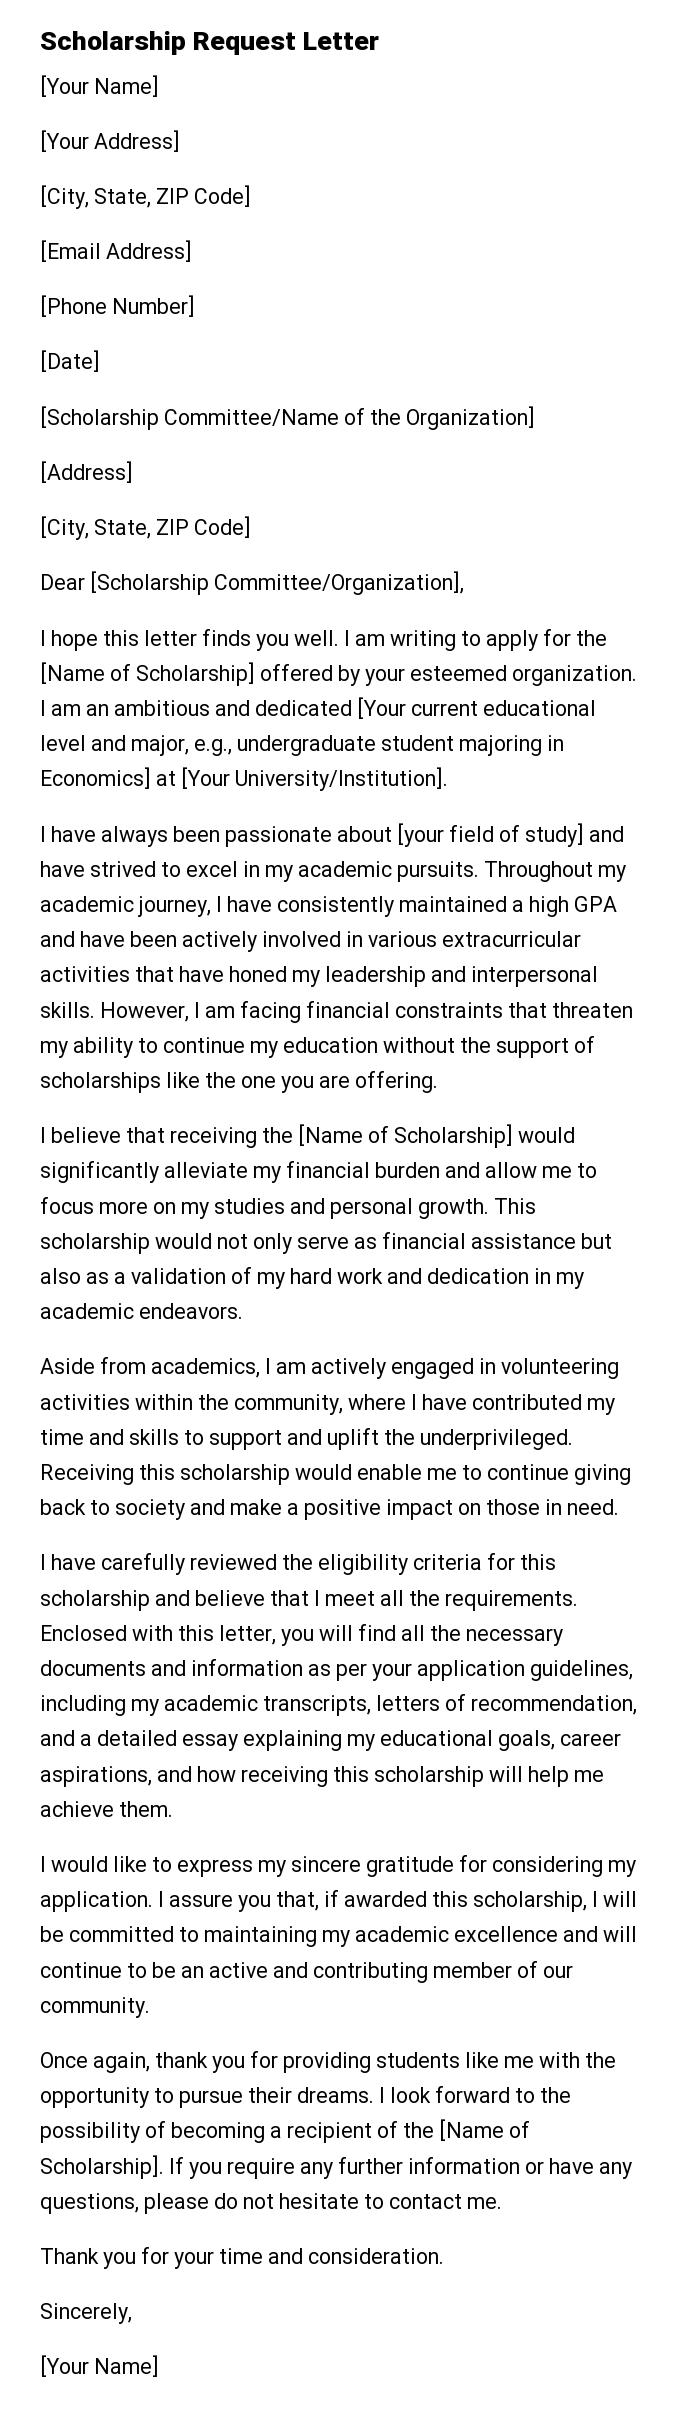 Scholarship Request Letter